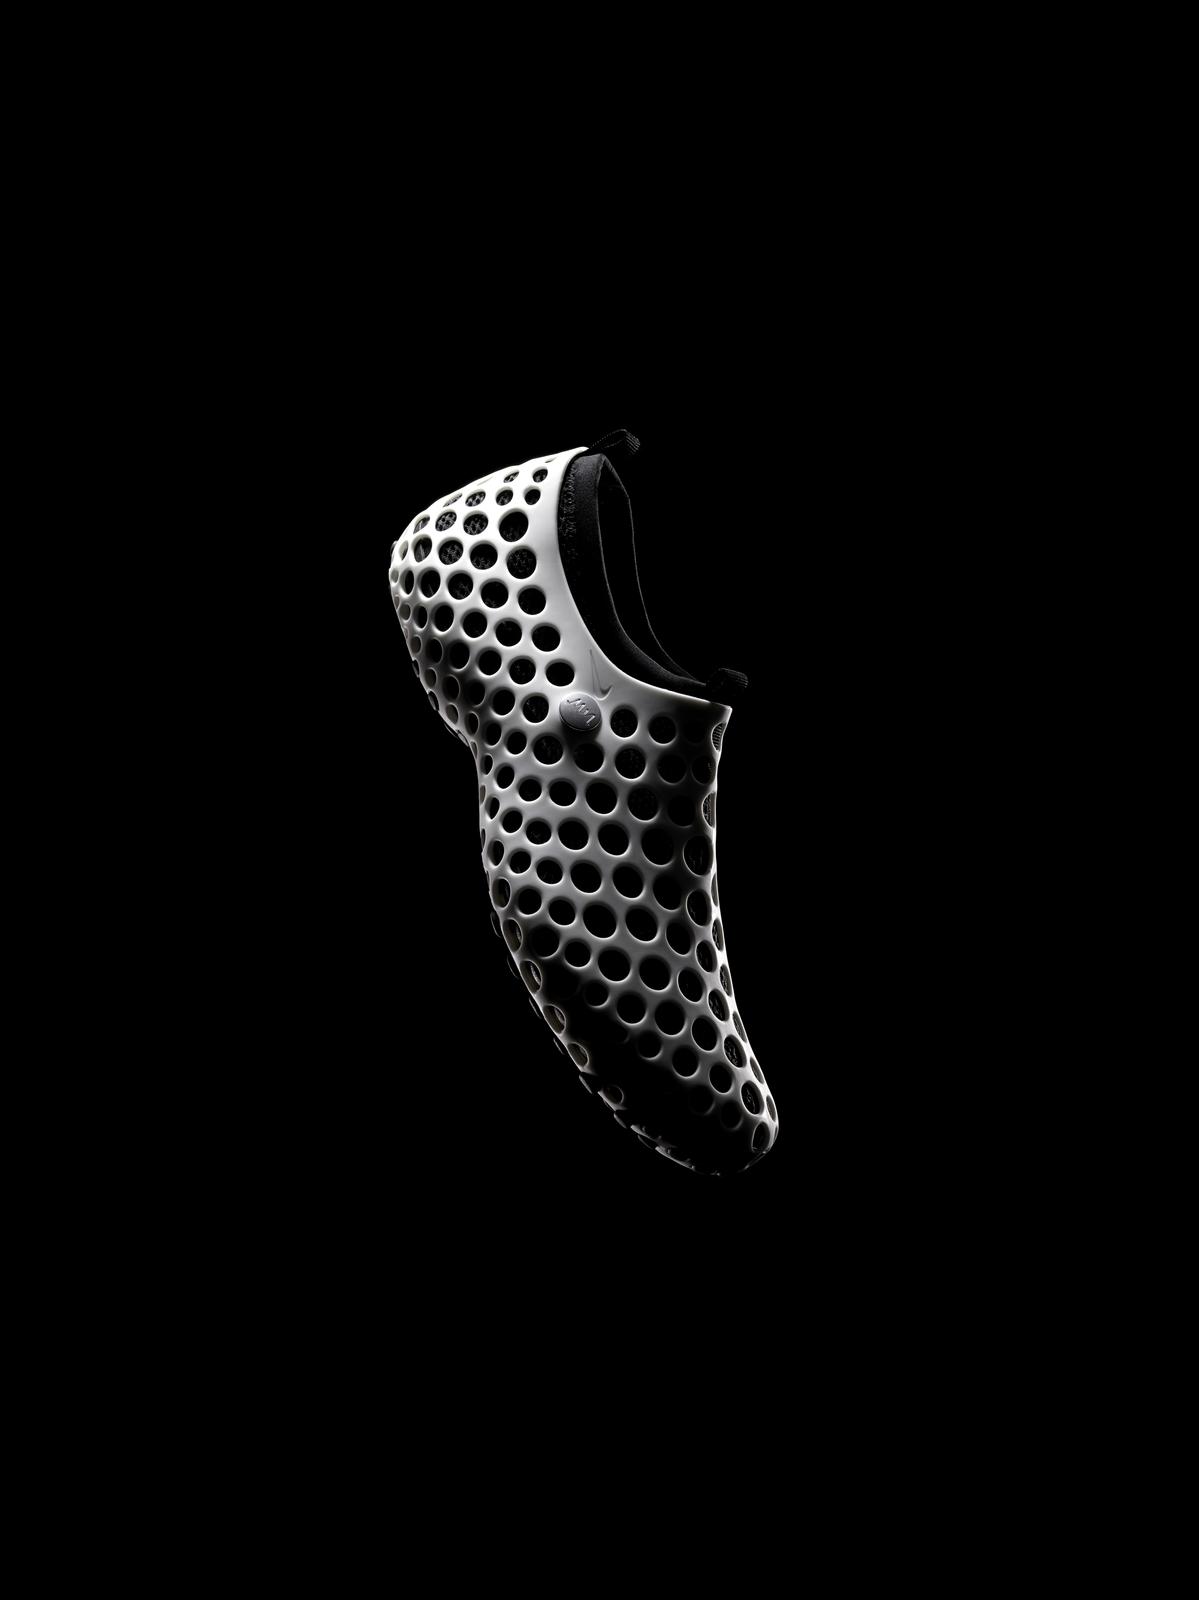 Marc Newson's Nike ZVEZDOCHKA Returns 10 Years Later - Design Milk